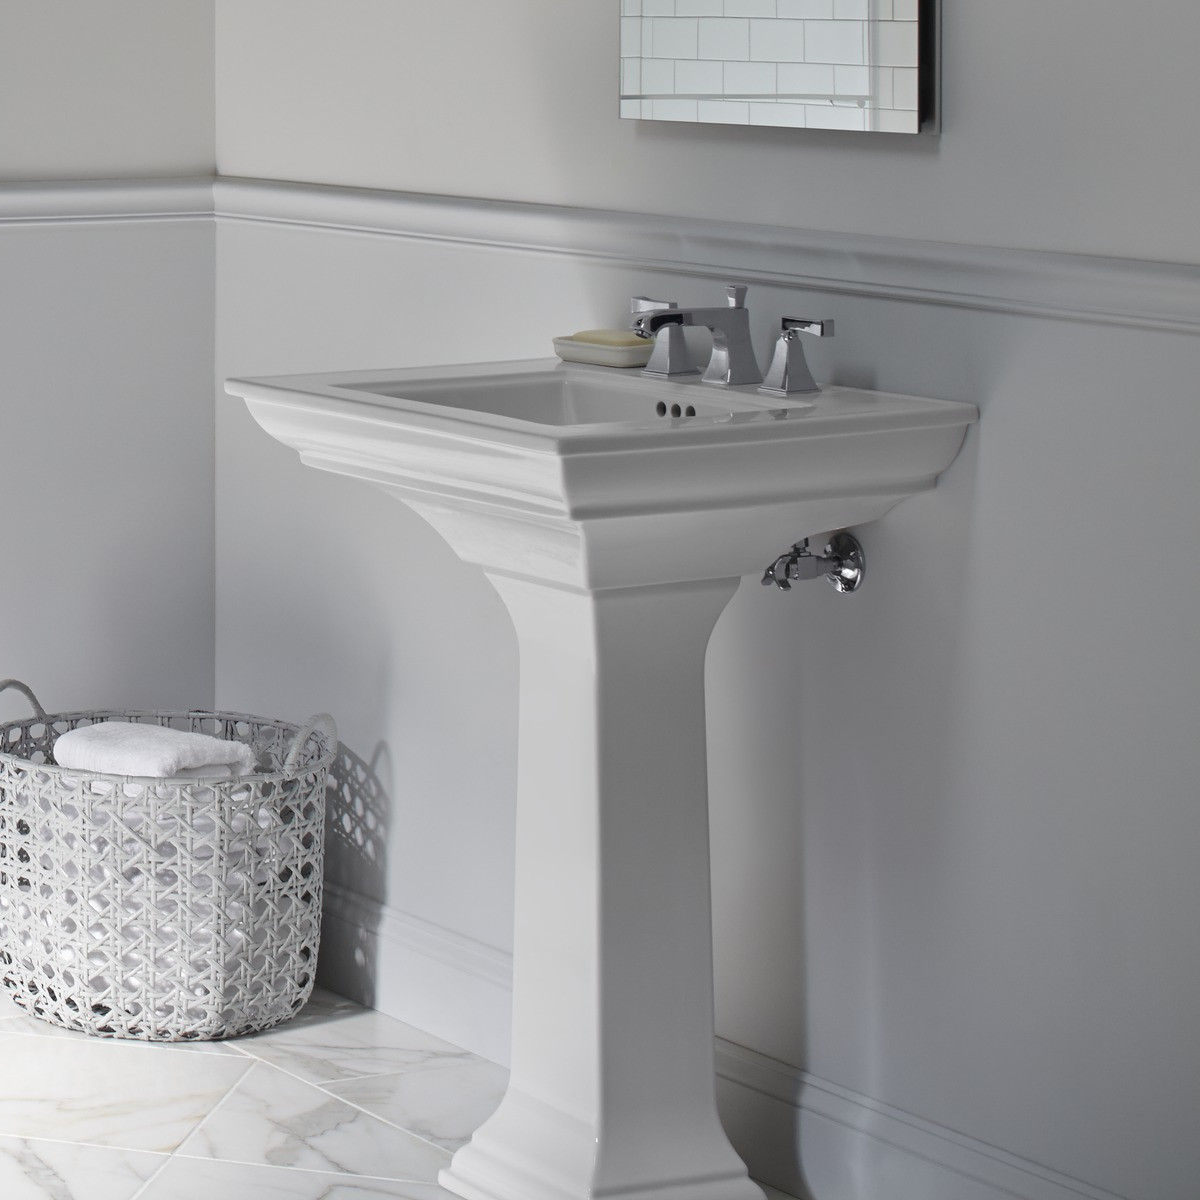 Best ideas about Pedestal Bathroom Sinks
. Save or Pin Kohler Memoirs Bathroom Sink Pedestal & Reviews Now.